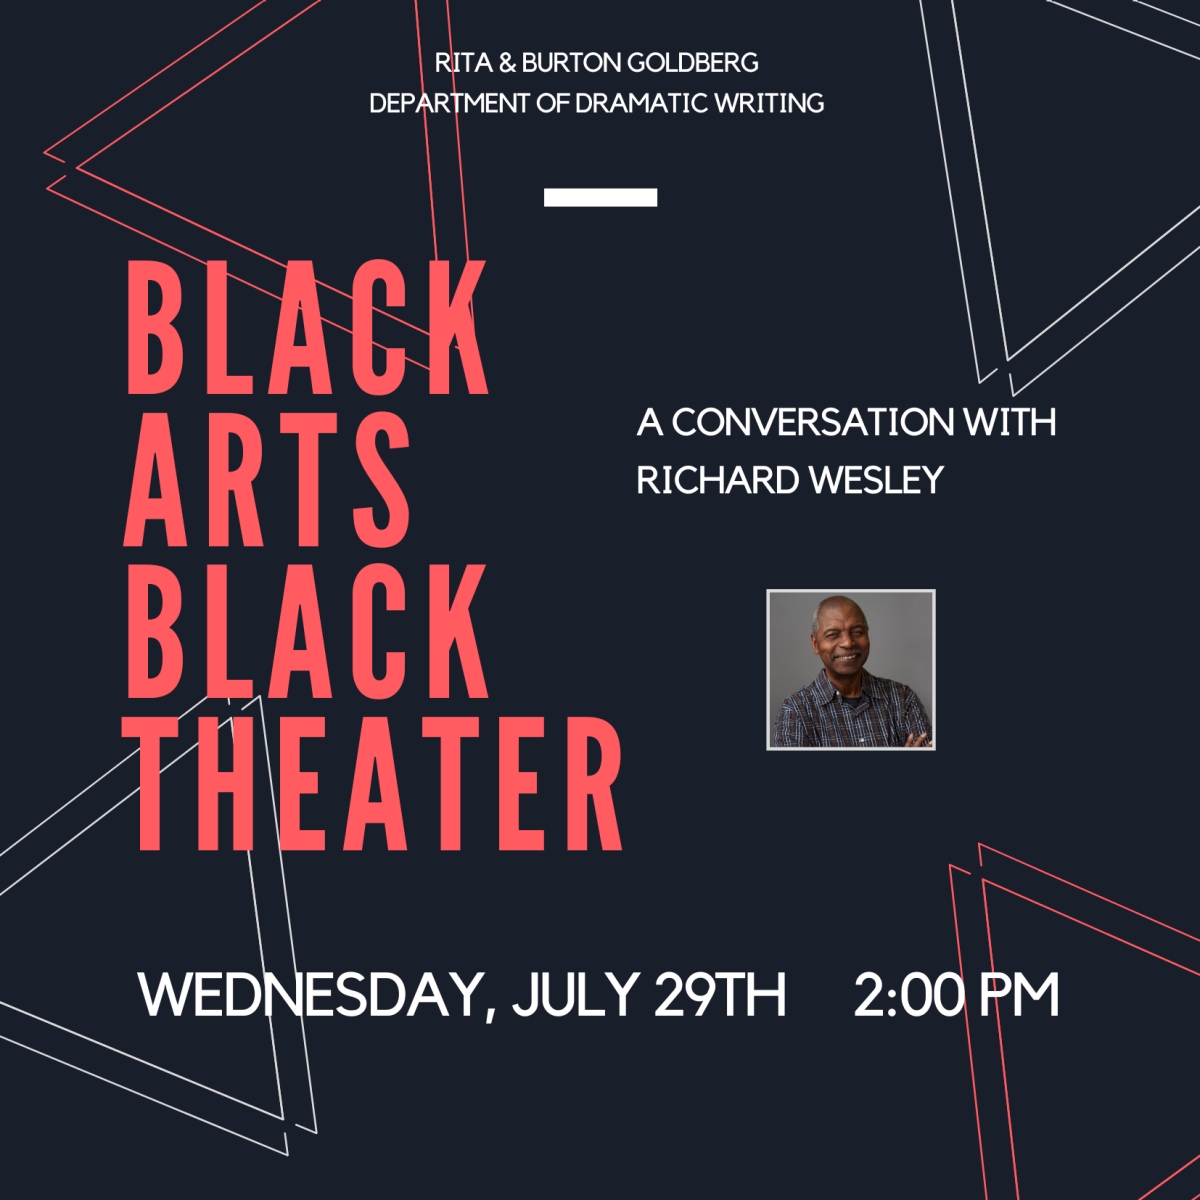 Black Arts Black Theater